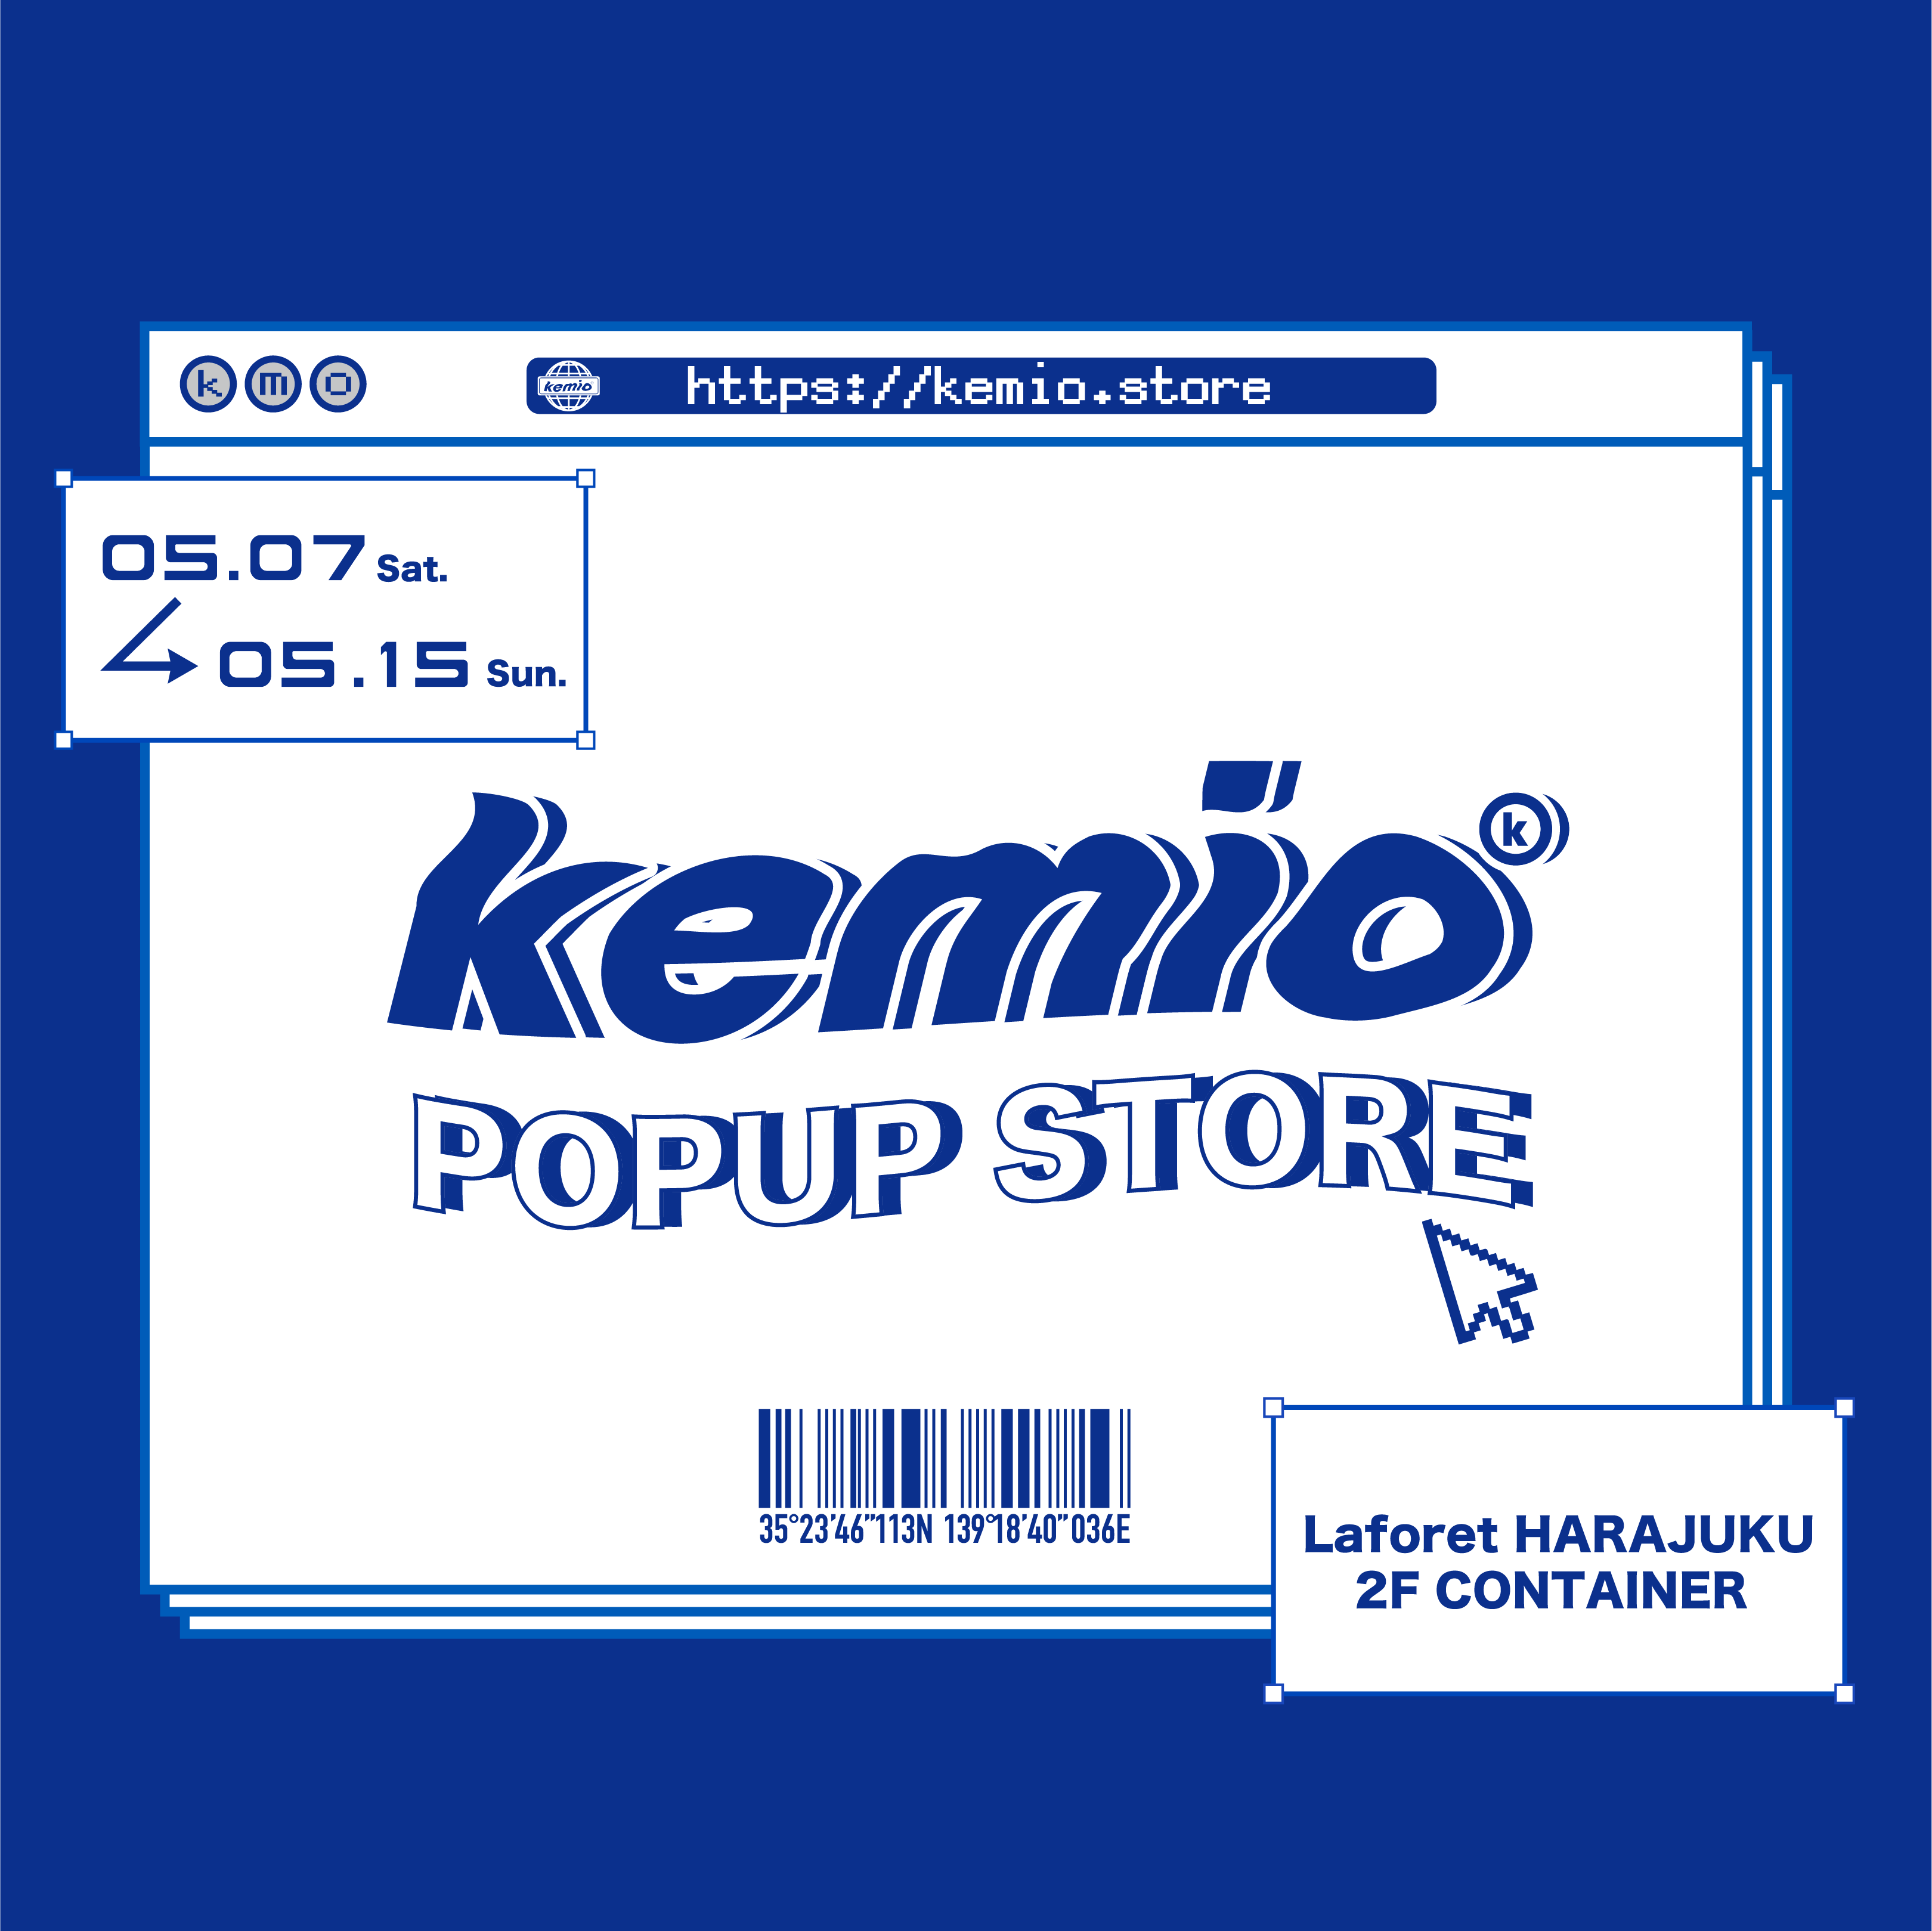 kemioプロデュースのオフィシャルグッズストア「kemio store」が初の ...